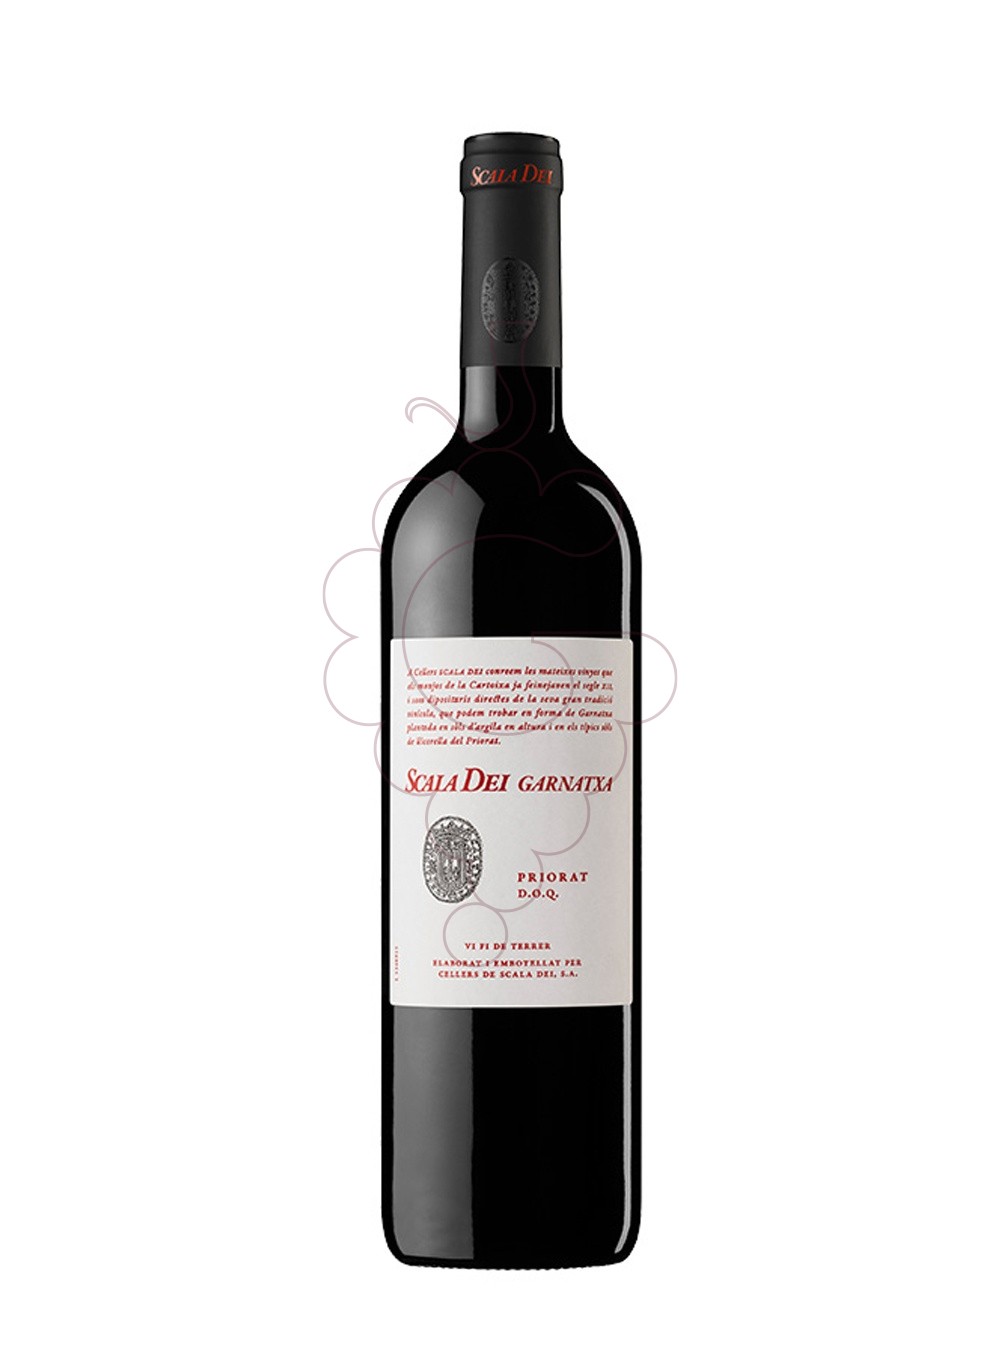 Photo Scala Dei red wine